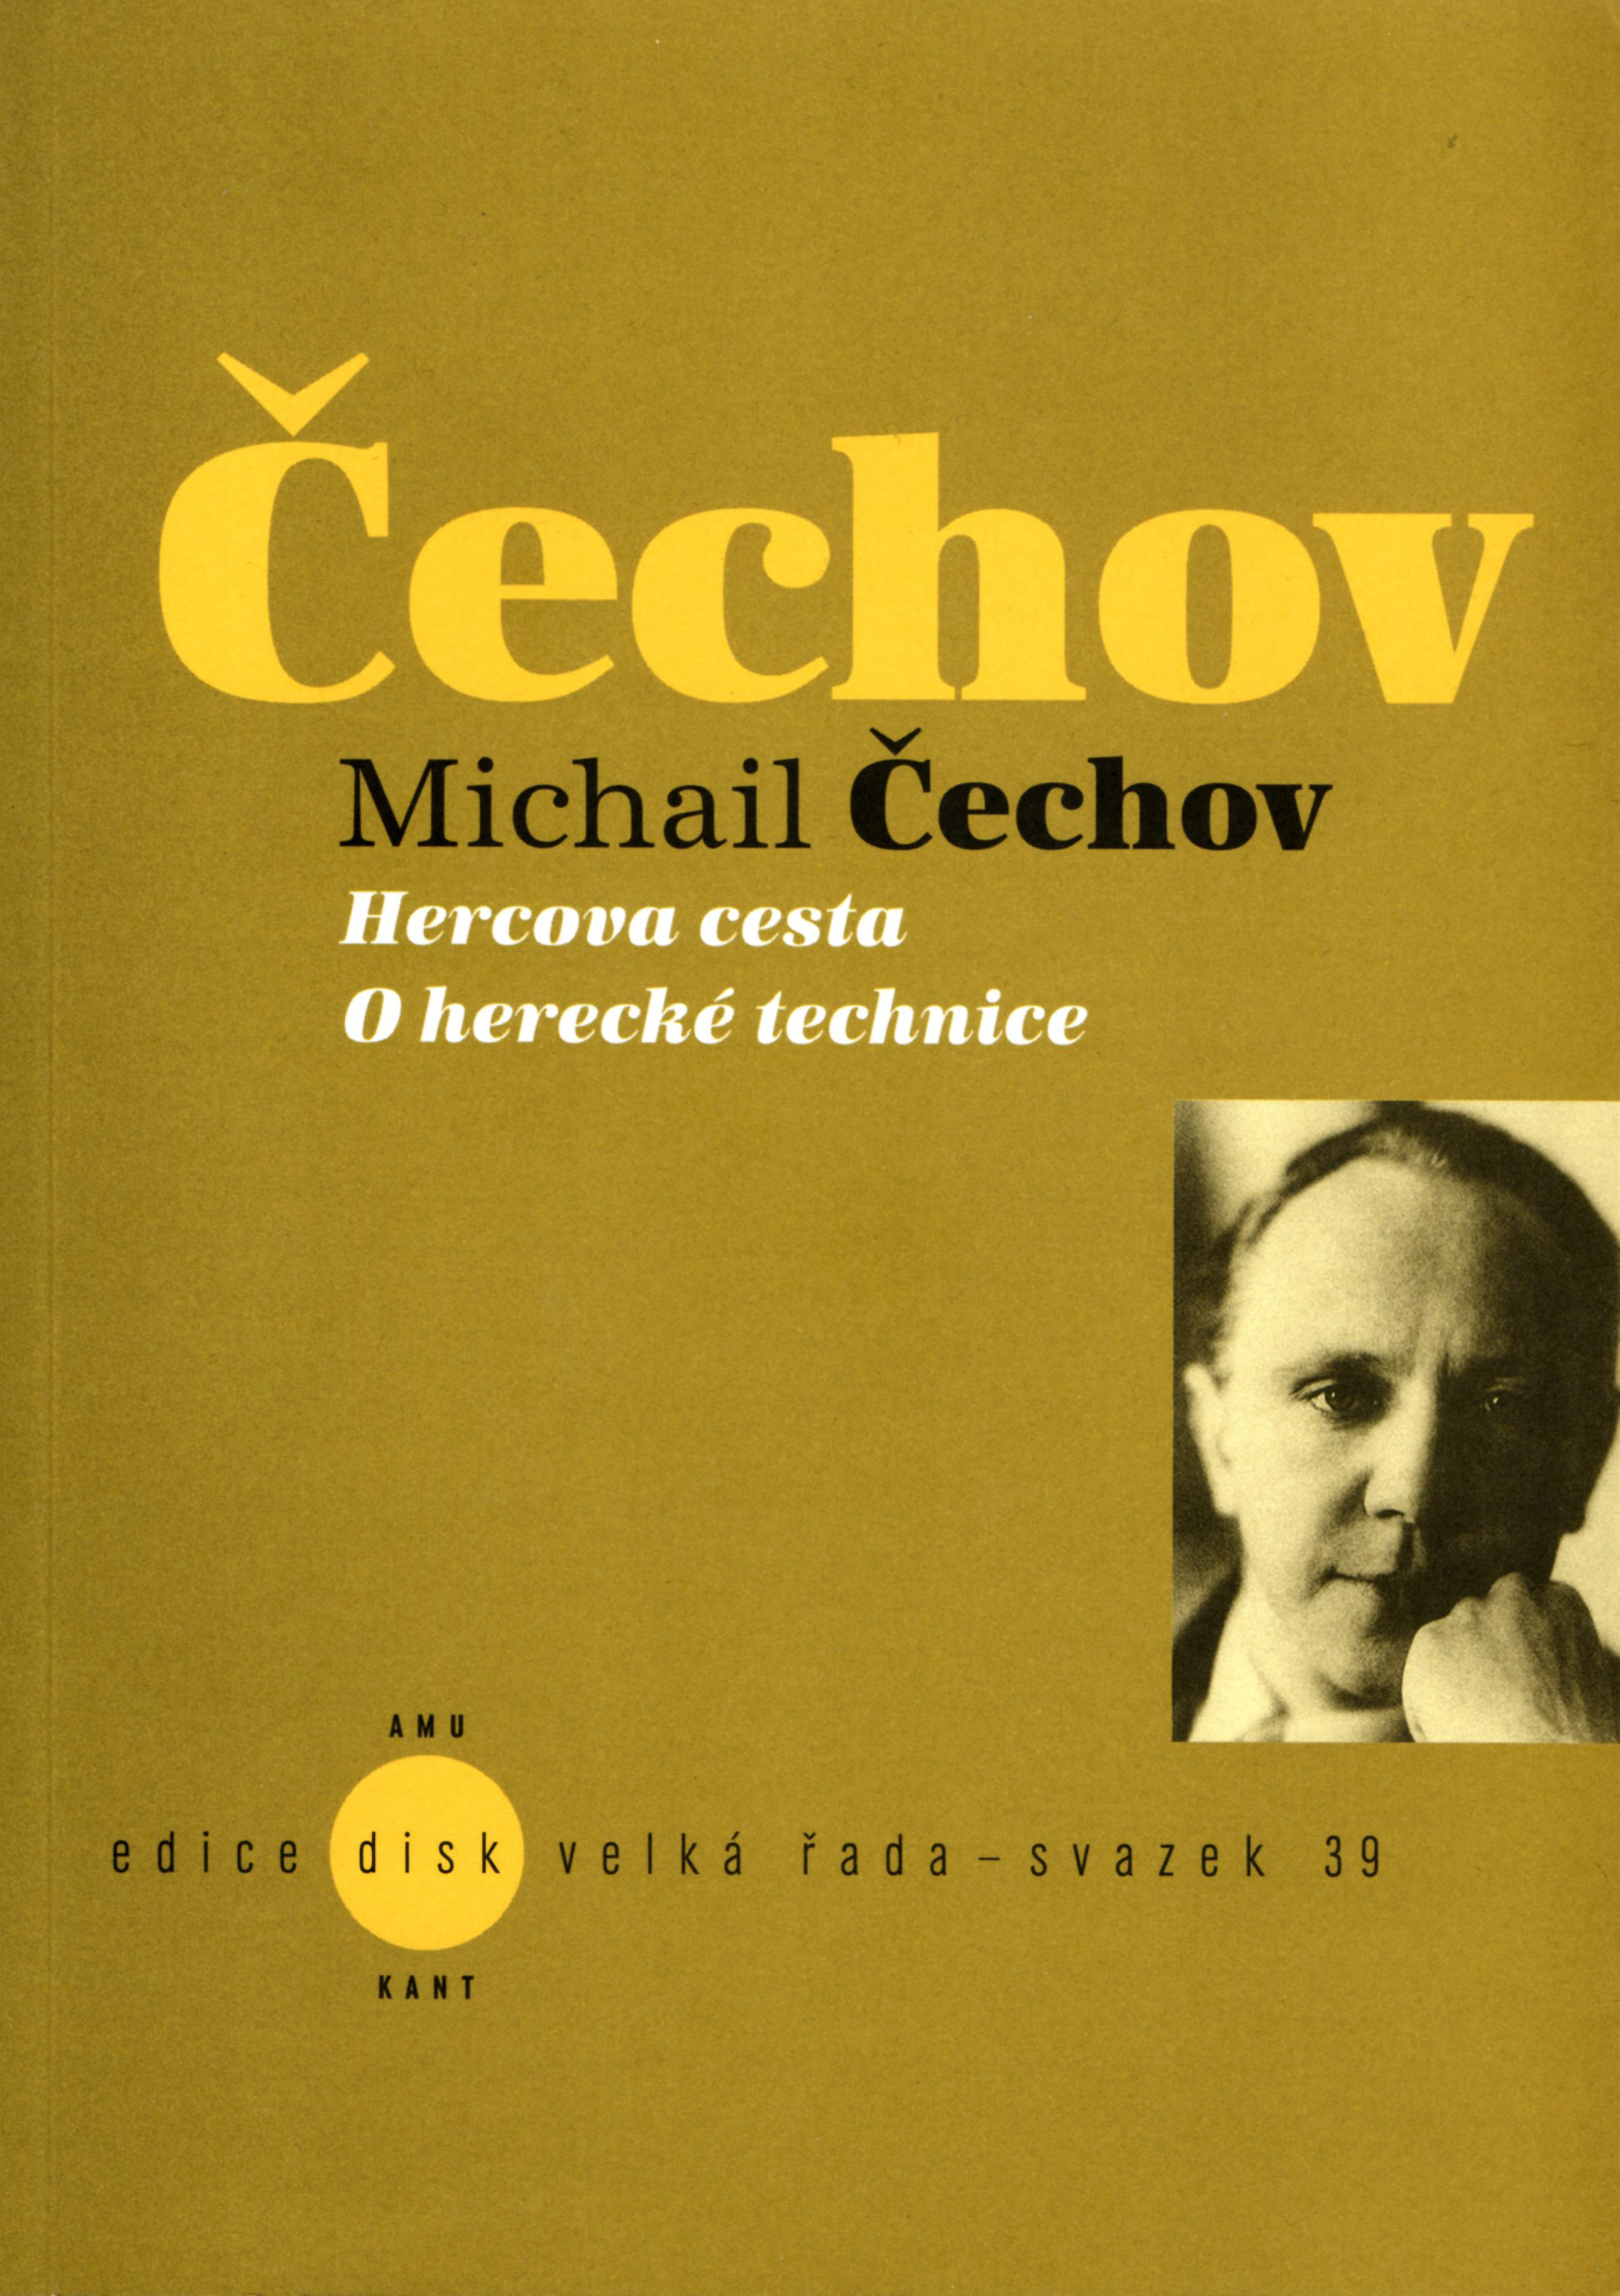 Cechov cover 